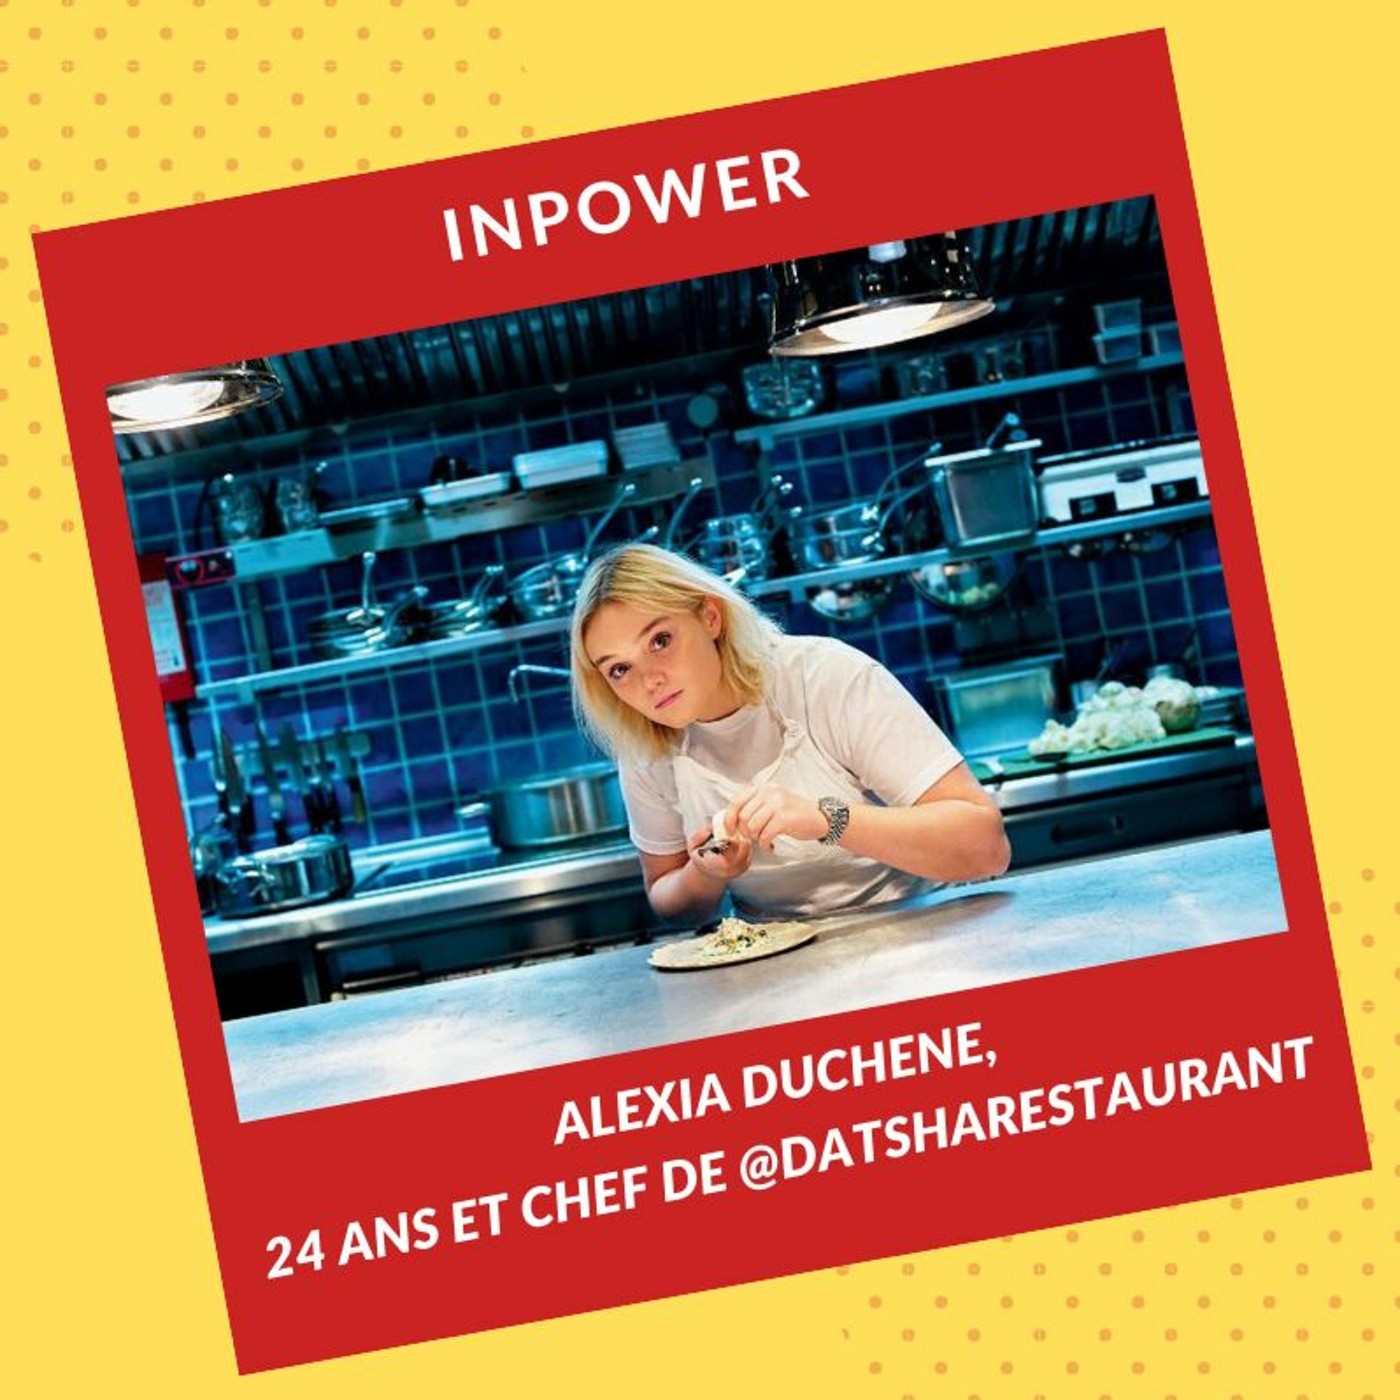 Alexia Duchene, 24 ans et Chef de @DatshaRestaurant